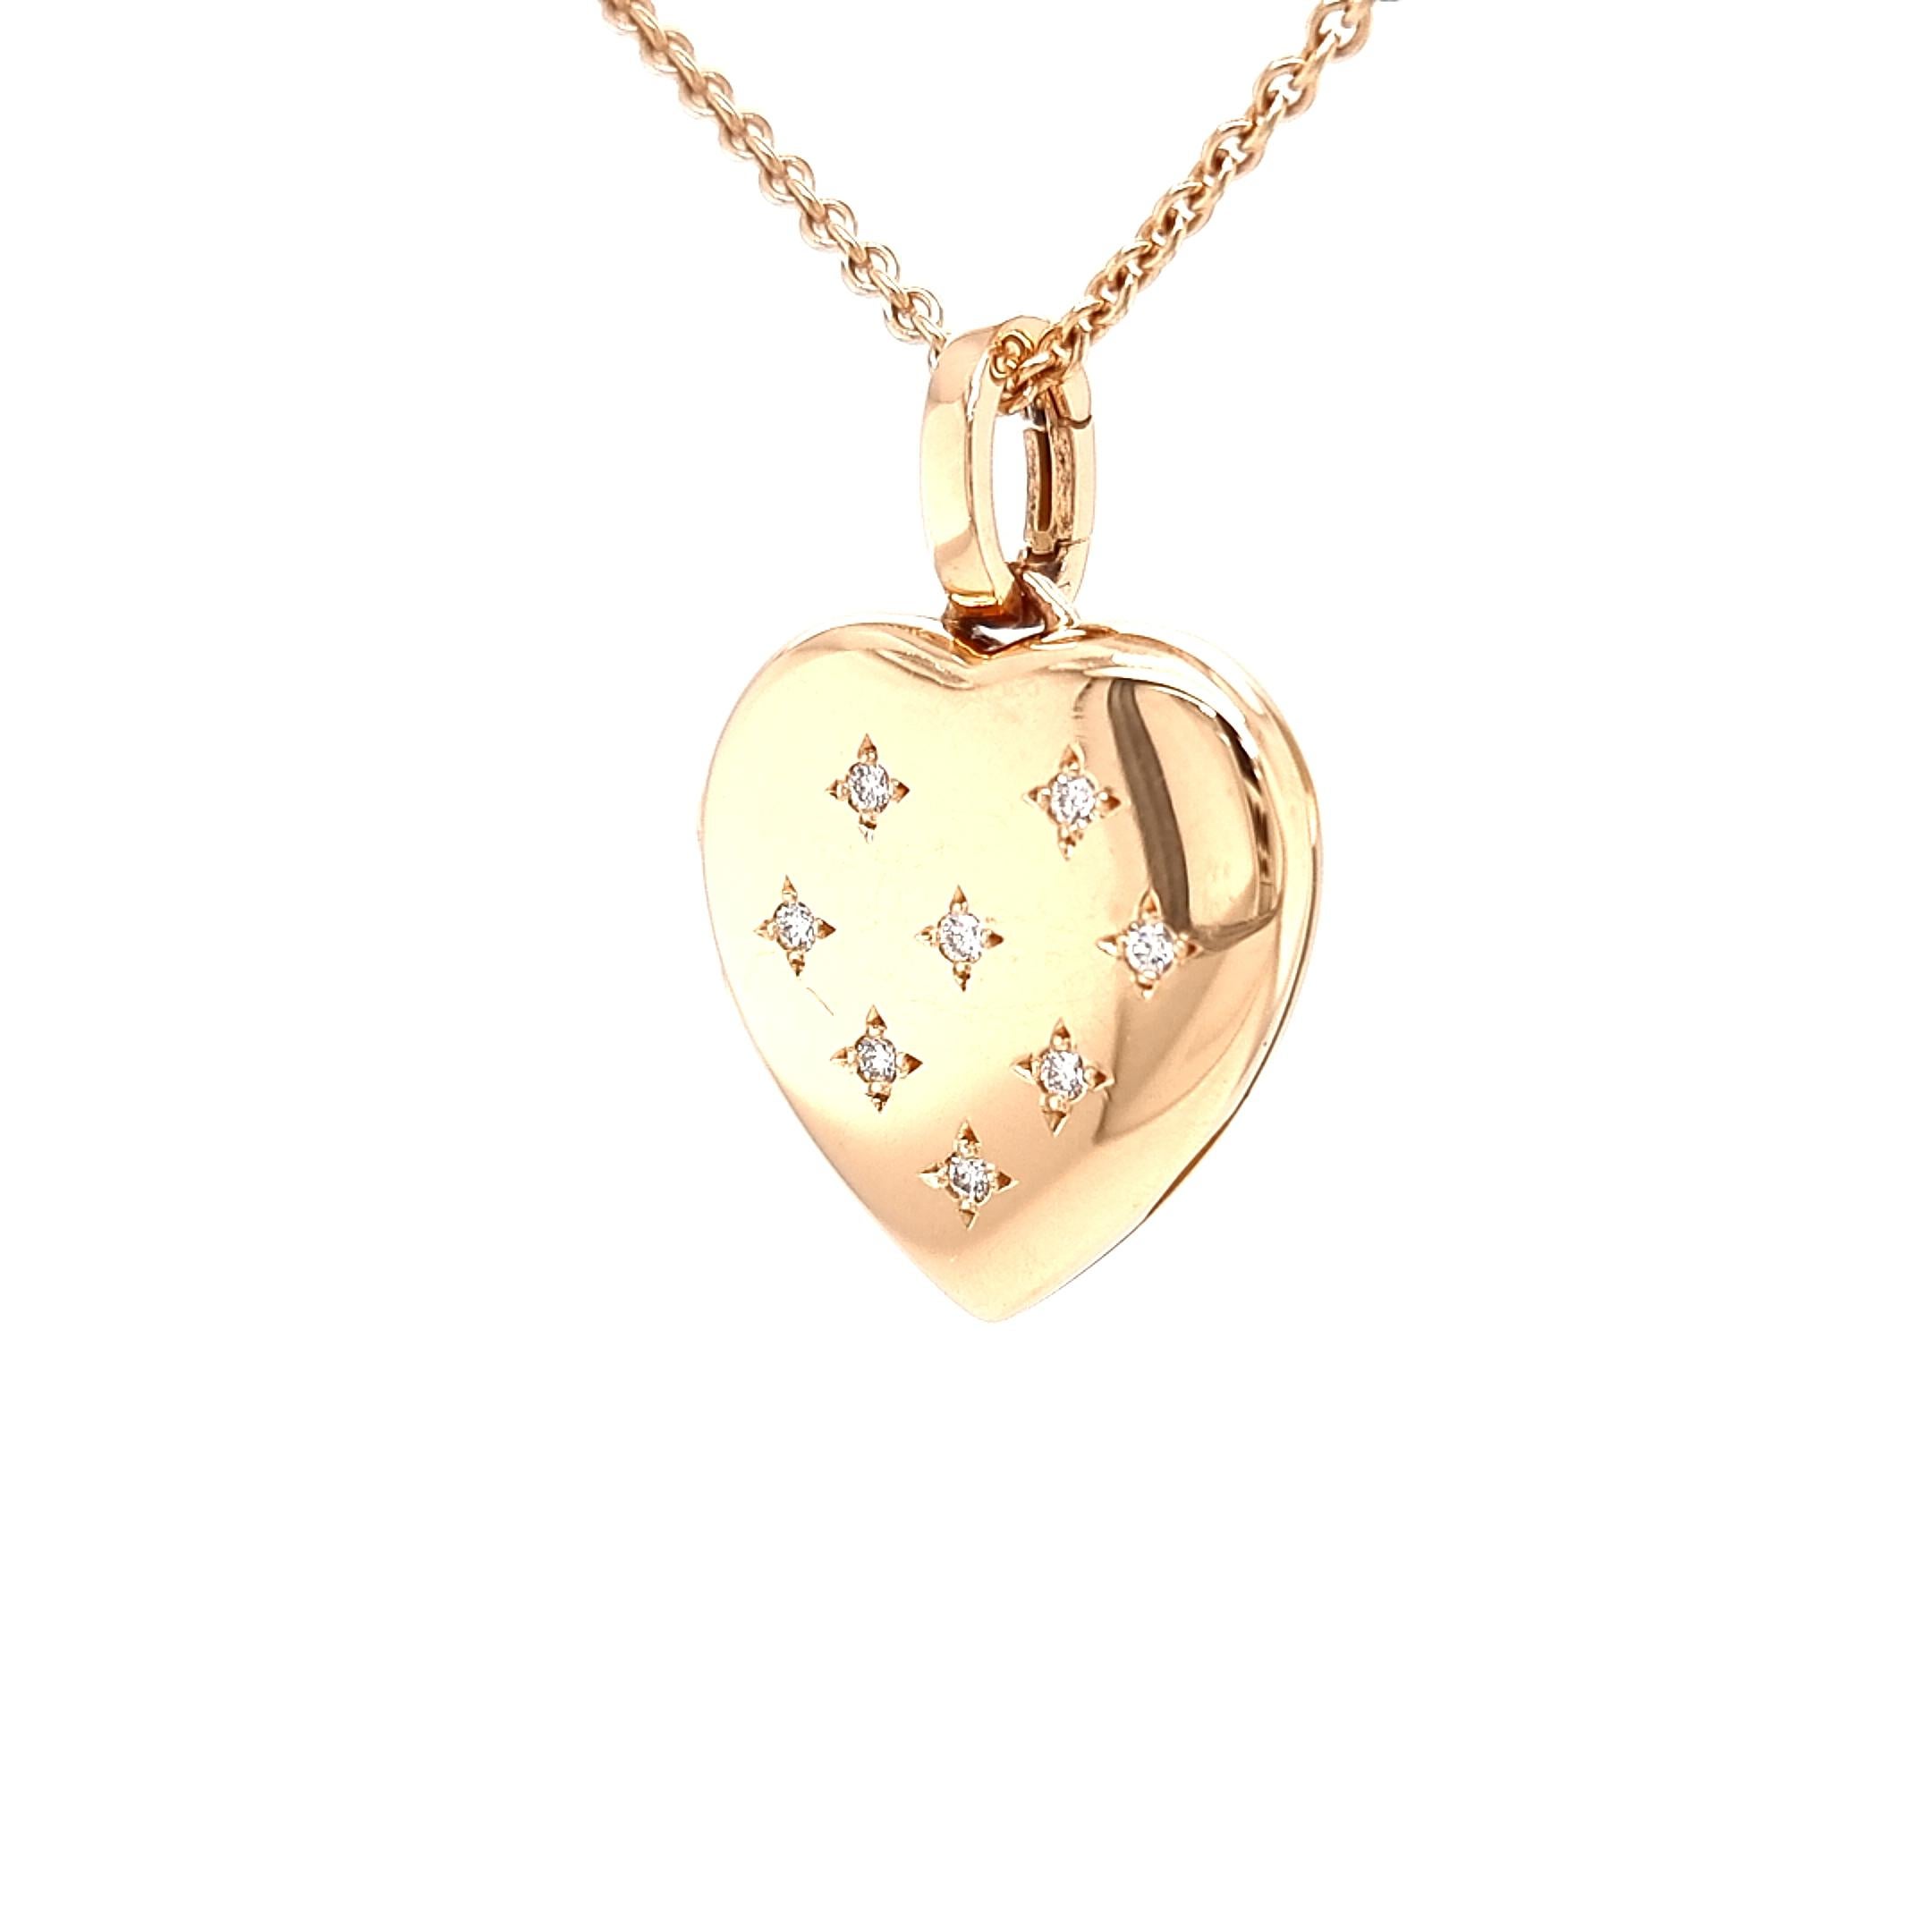 Brilliant Cut Heart Shaped Locket Pendant Necklace, 18k Rose Gold, 8 Diamonds 0.16ct For Sale